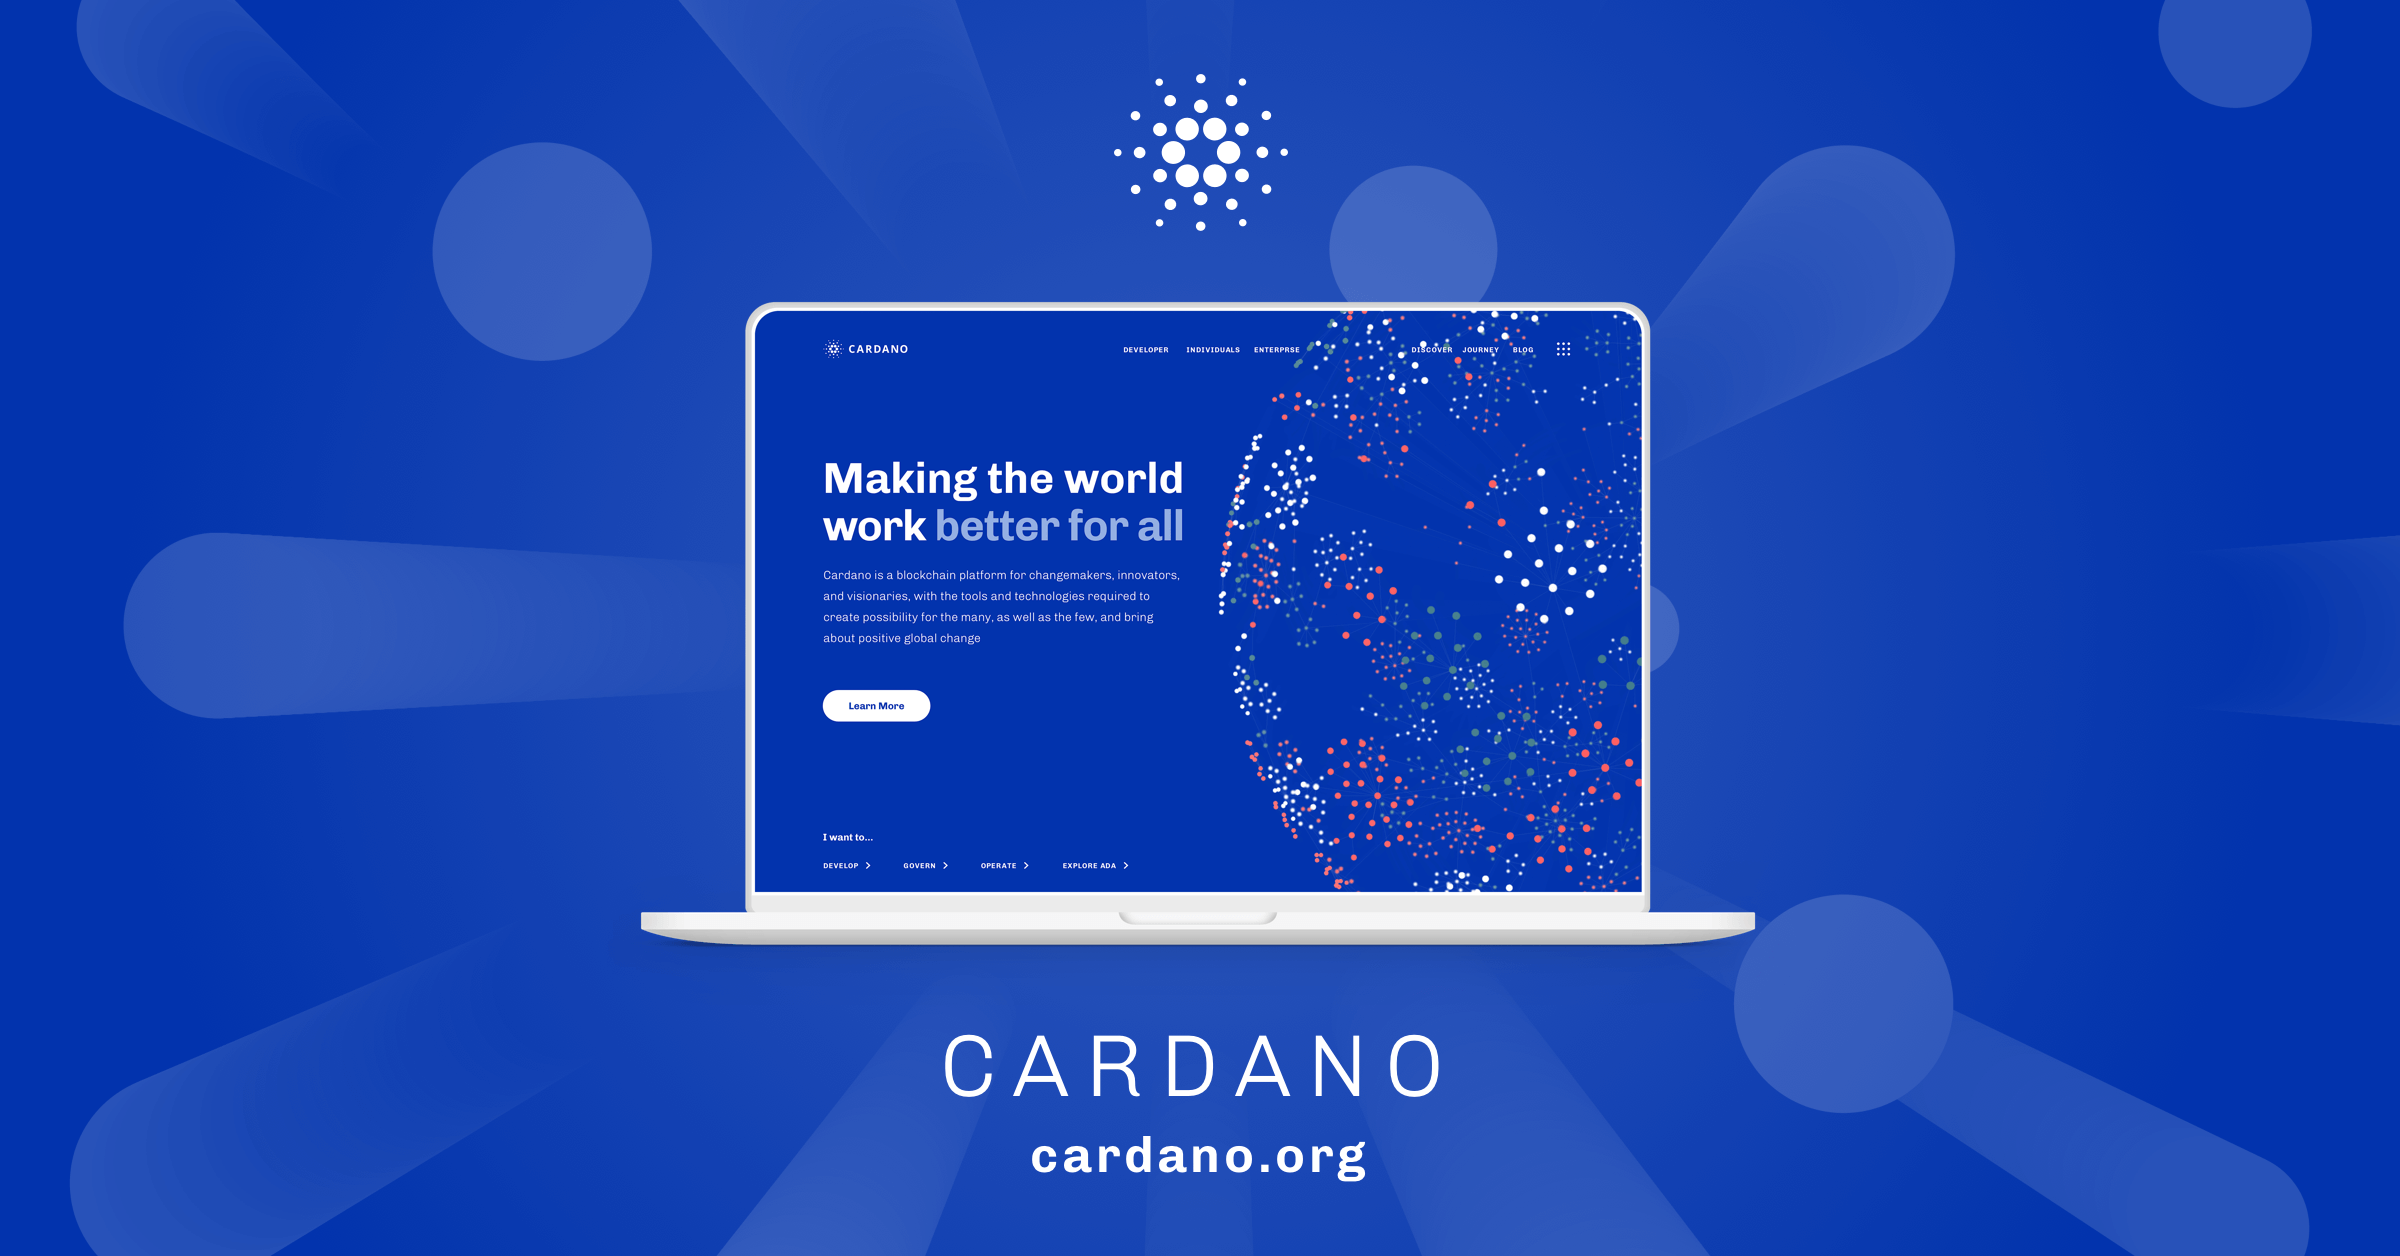 Cardano (blockchain platform) - Wikipedia